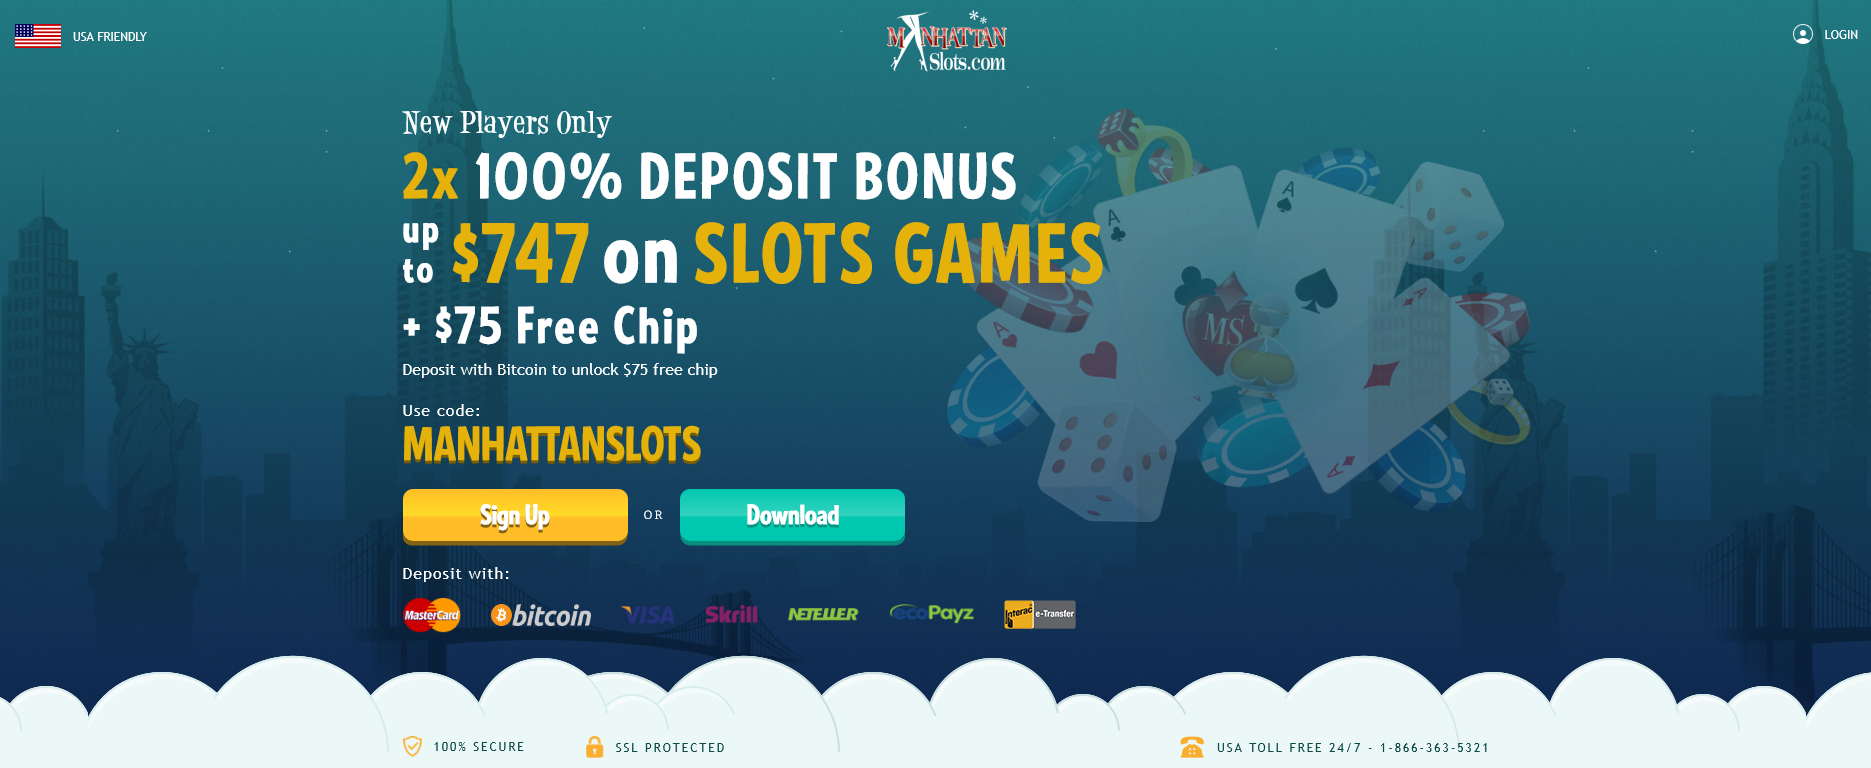 Manhattan Slots-2x 100% DEPOSIT BONUS up
                                                          to $747 on
                                                          SLOTS GAMES +
                                                          $75 Free Chip
                                                          Deposit with
                                                          Bitcoin to
                                                          unlock $75
                                                          free chip Use
                                                          code:
                                                          MANHATTANSLOTS